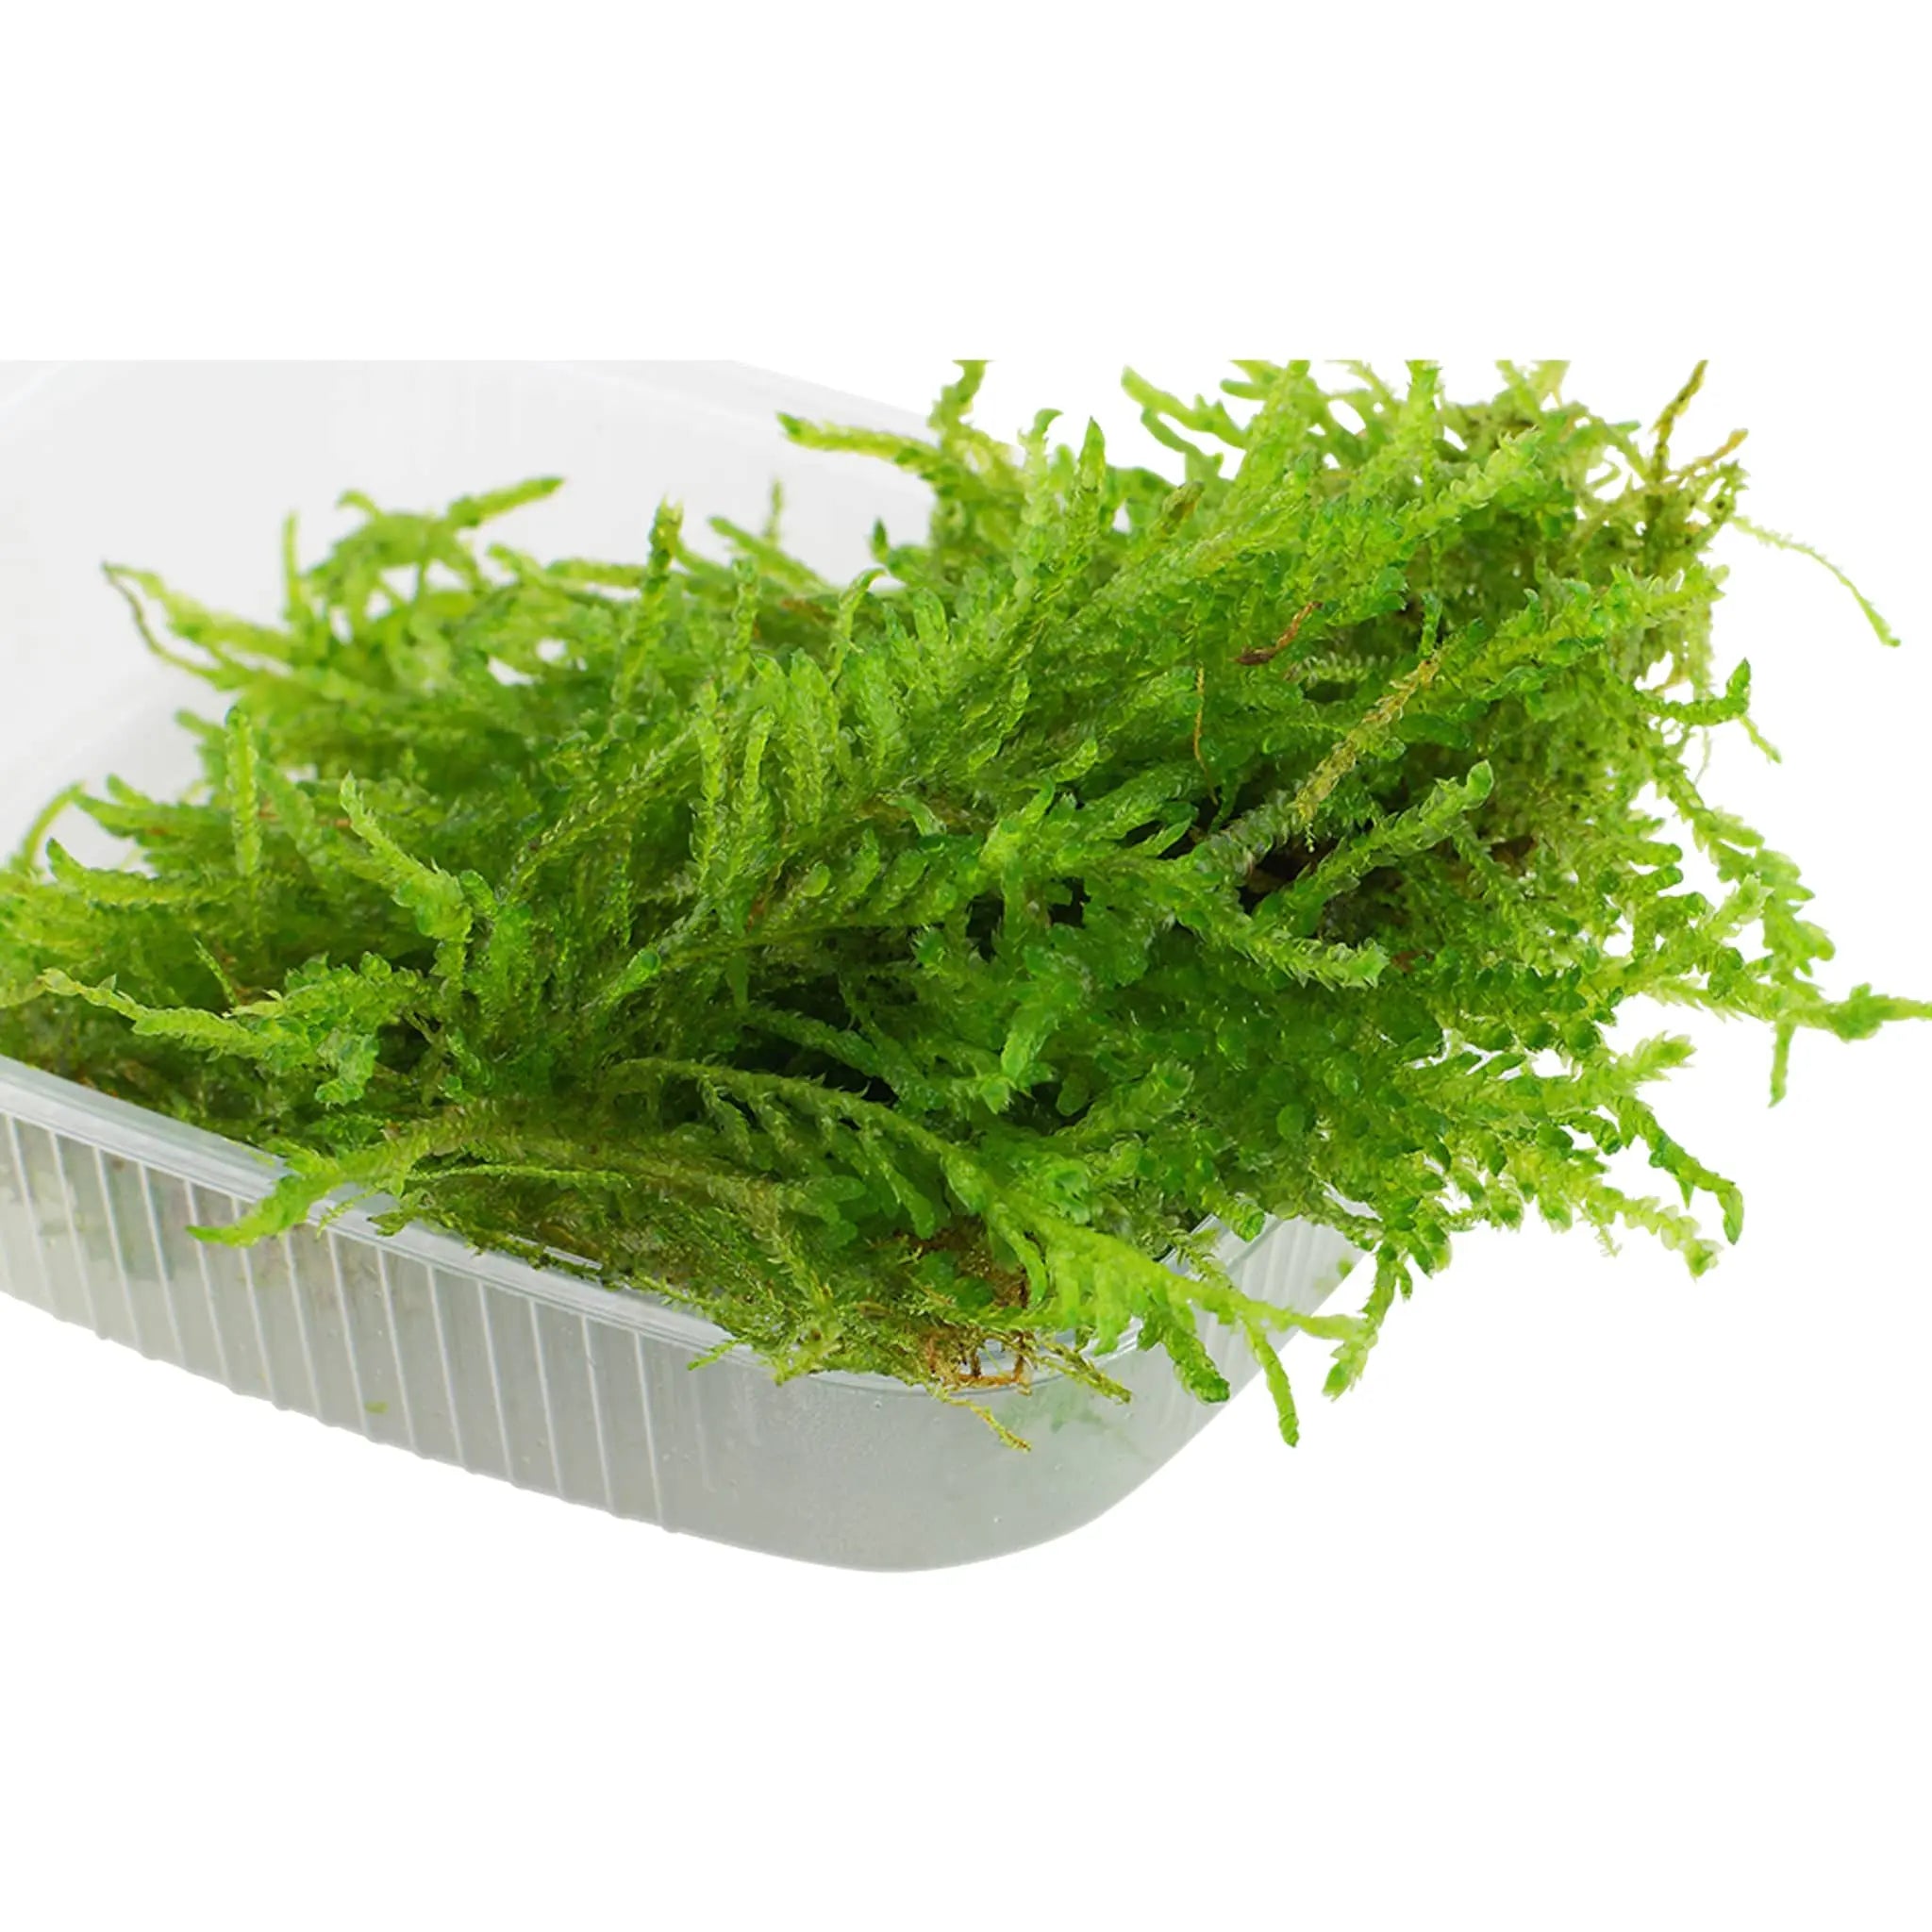 Vesicularia ferriei (Weeping Moss) - Aqua Essentials